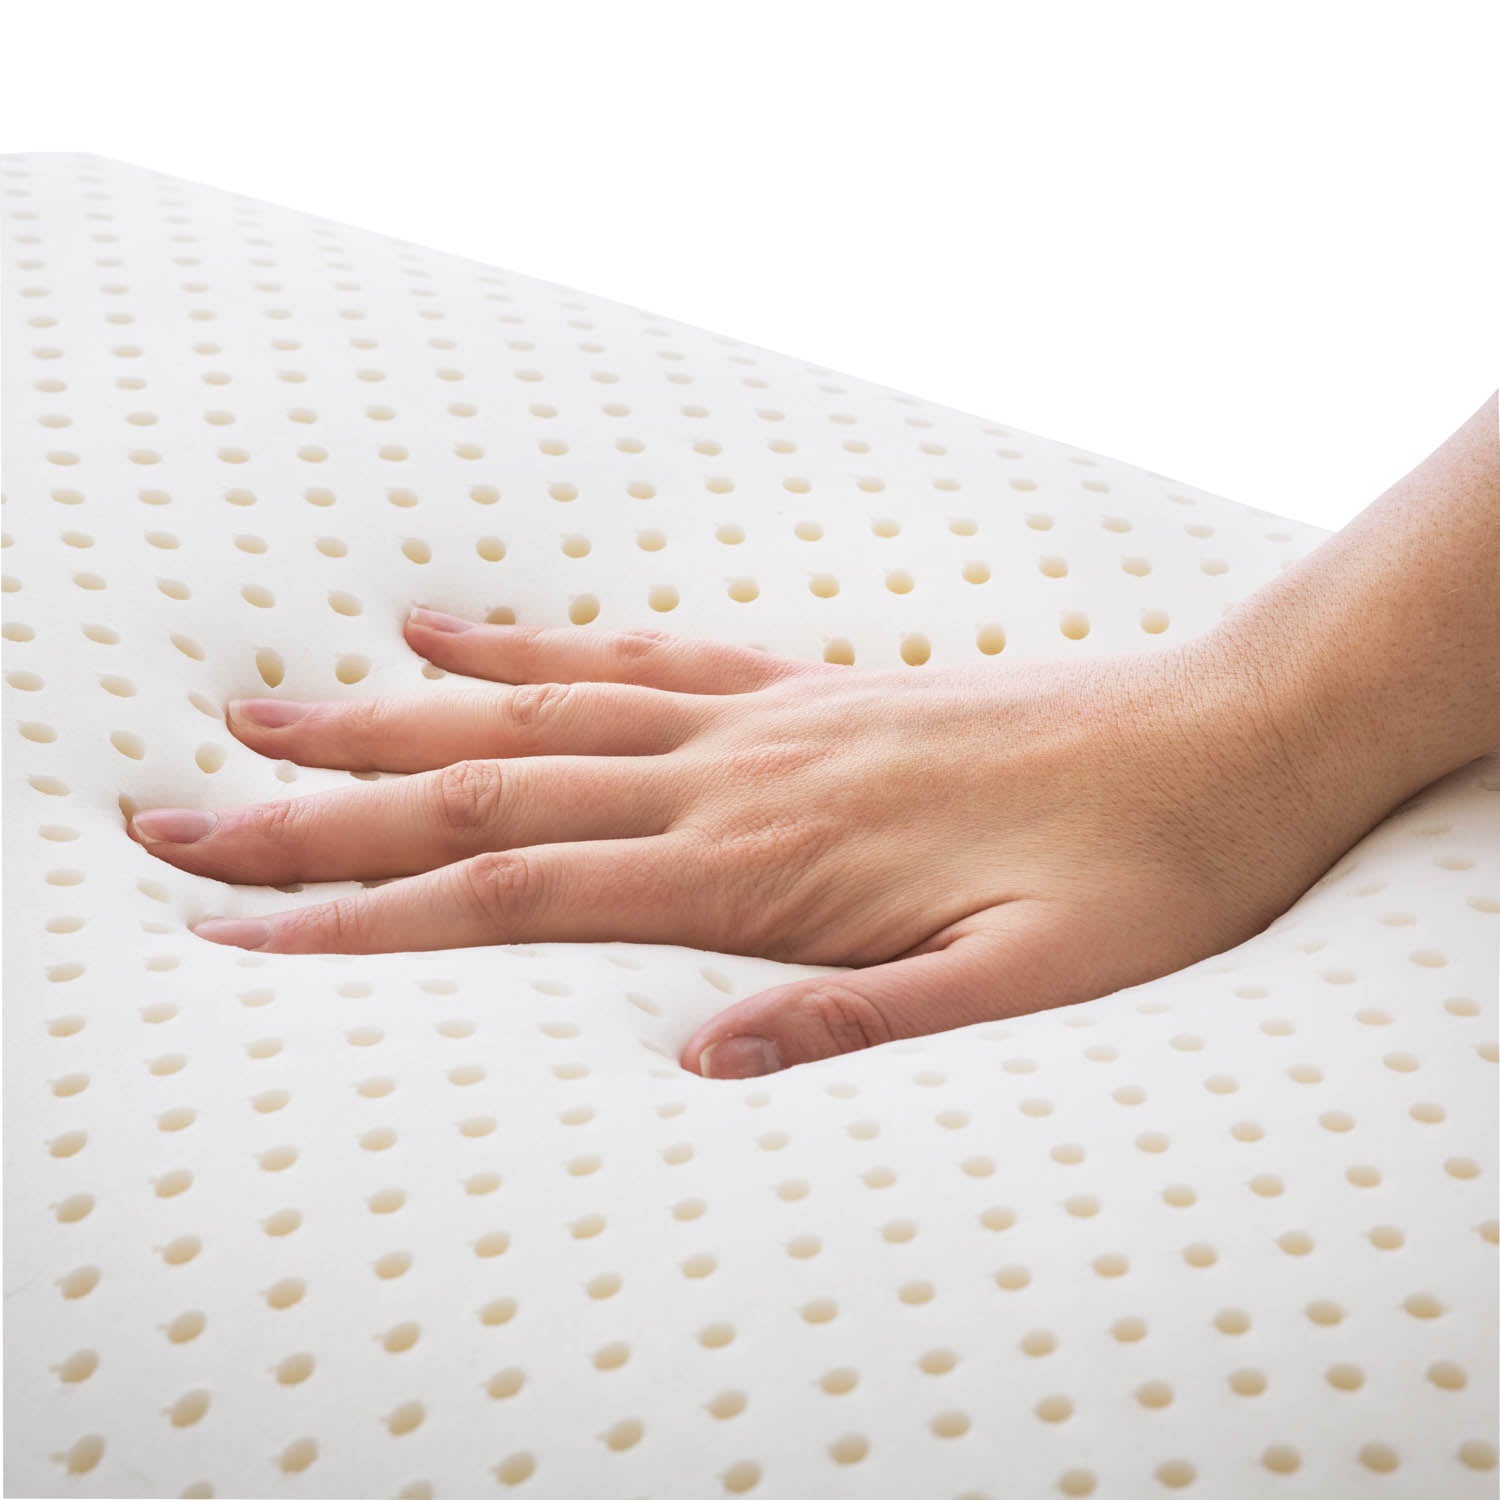 Latex Pillow - Ultimate Comfort Sleep